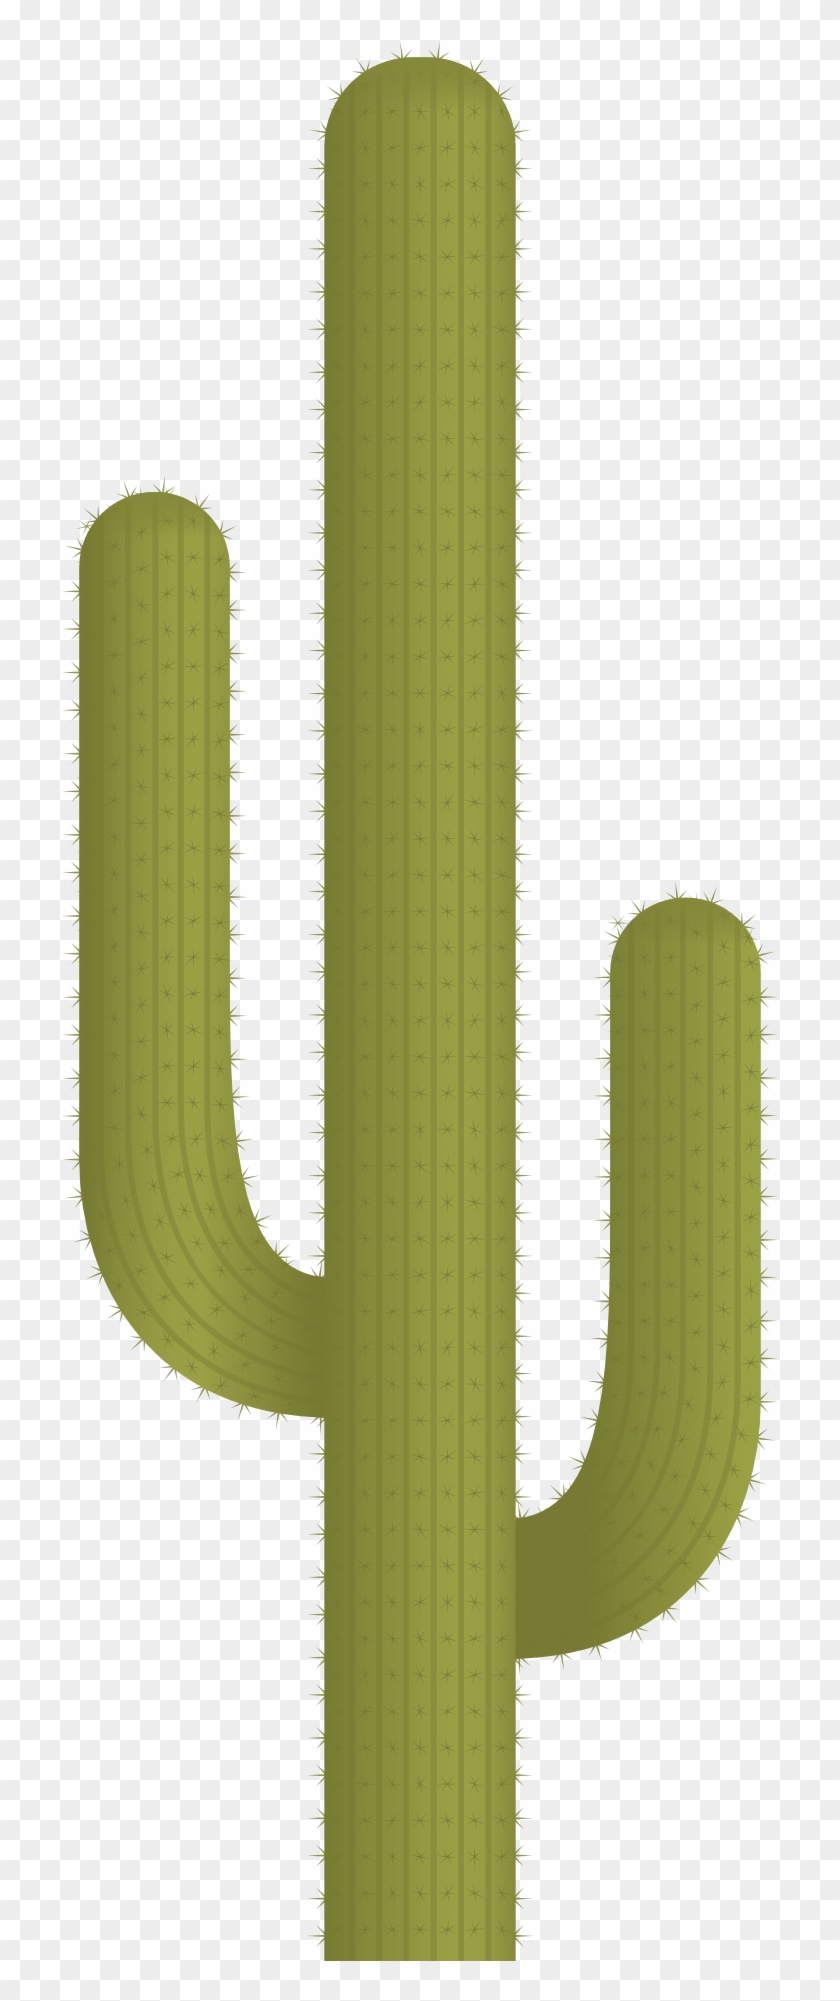 Cactus Plant Vector Png Image - Transparent Background Png Cactus #991876